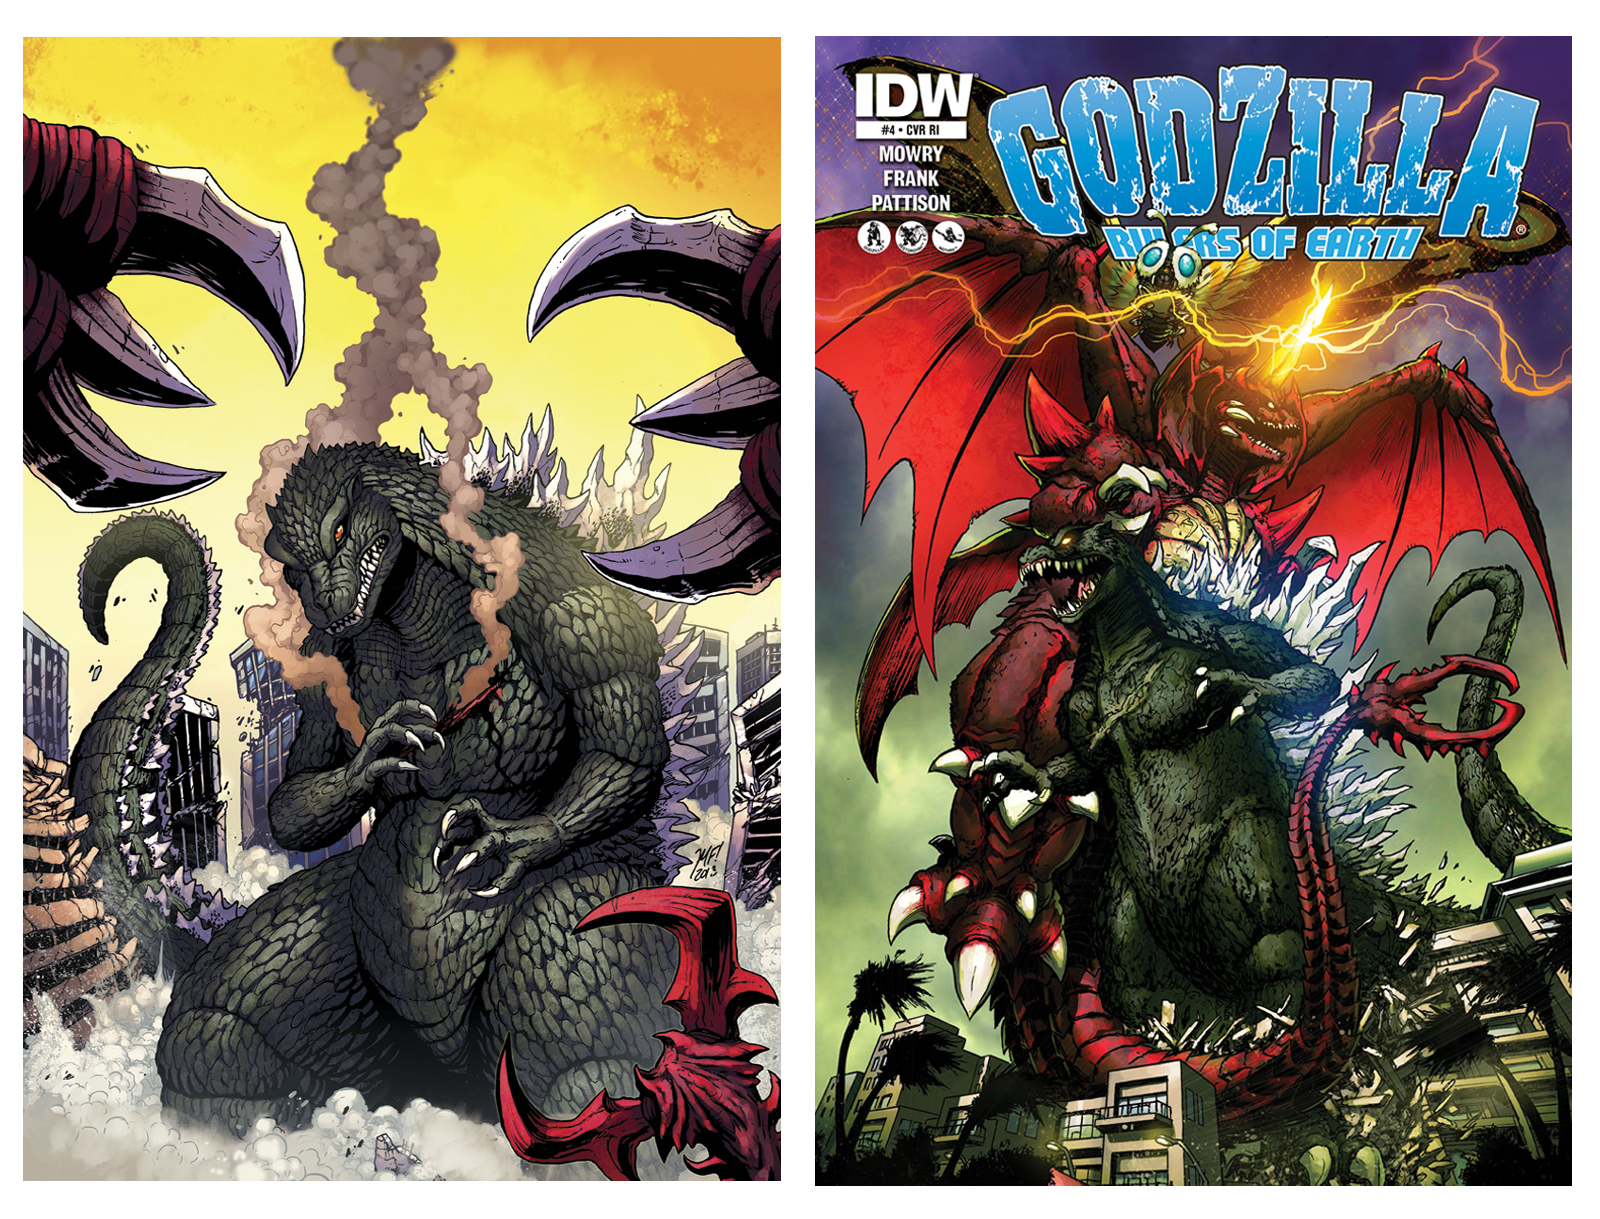 Godzilla Rulers of Earth Vol 3 TPB Chris Mowry & Matt Frank